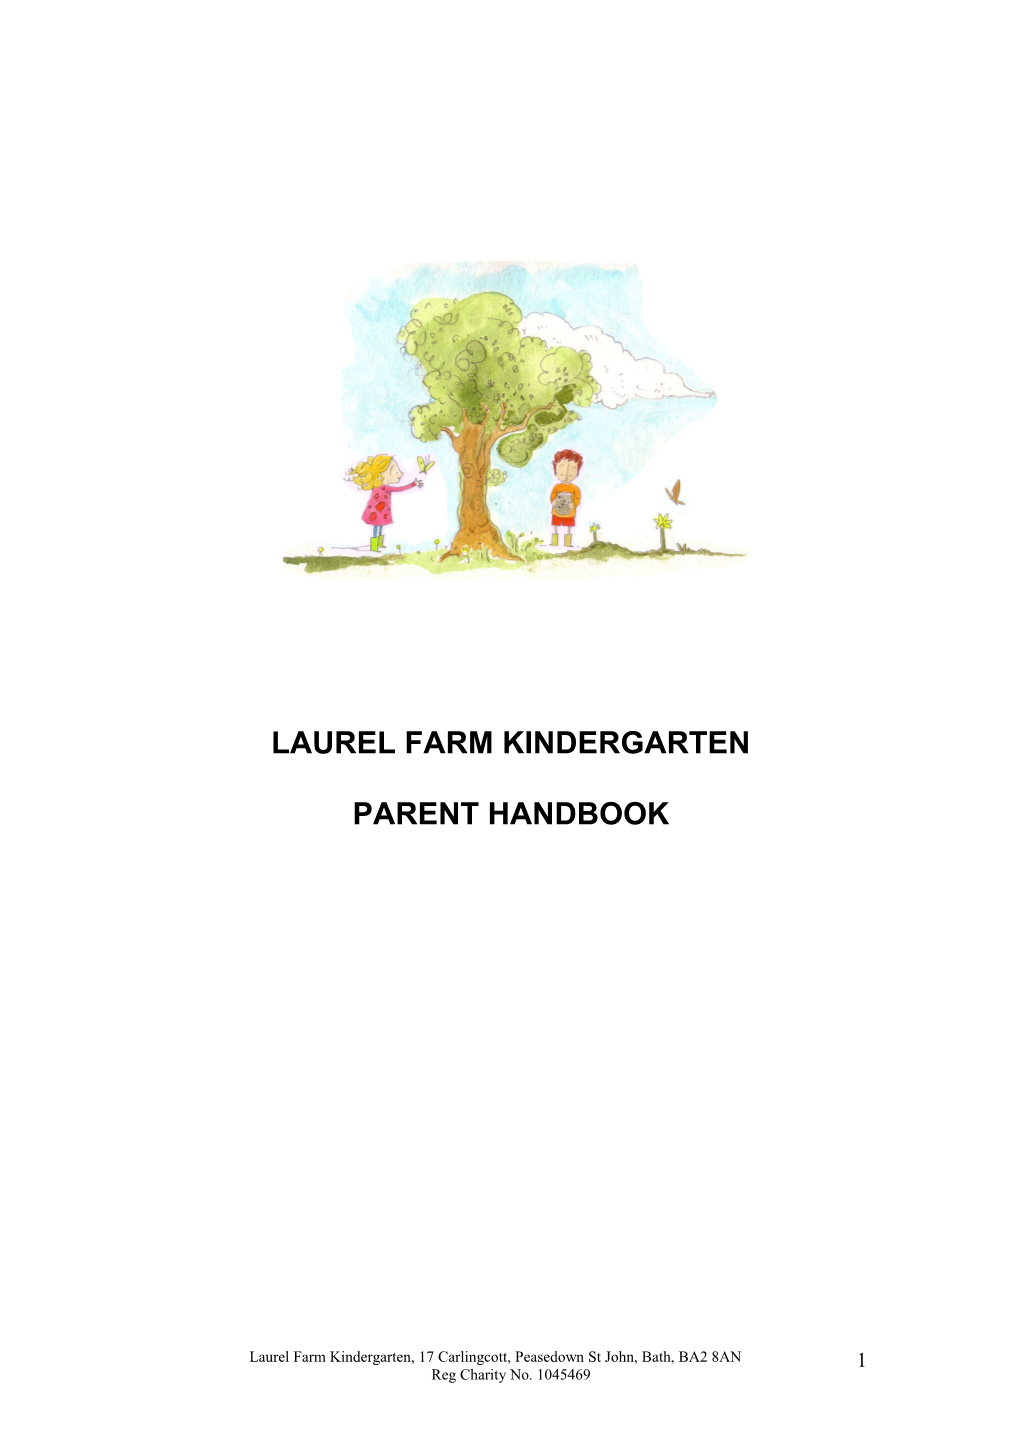 Laurel Farm Kindergarten